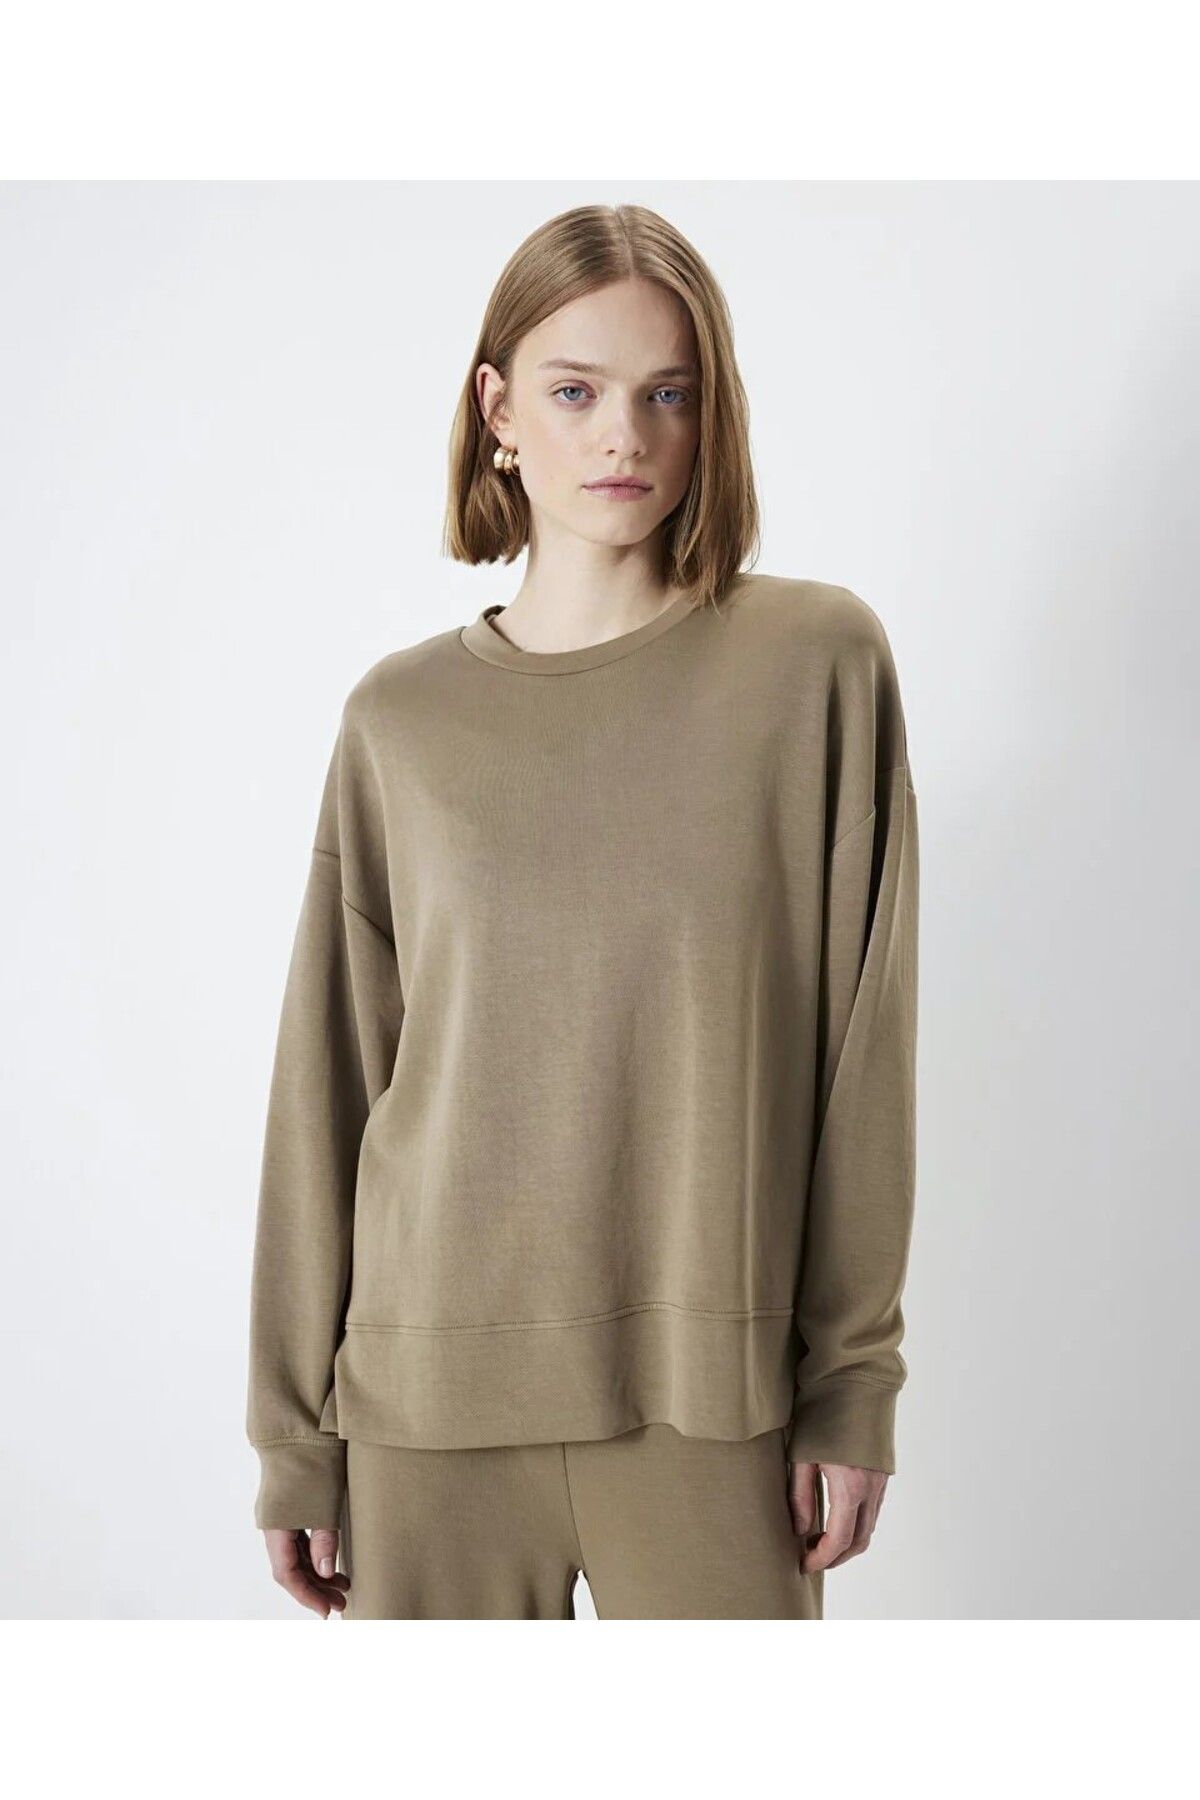 İpekyol Basic sweatshirt 91035-24